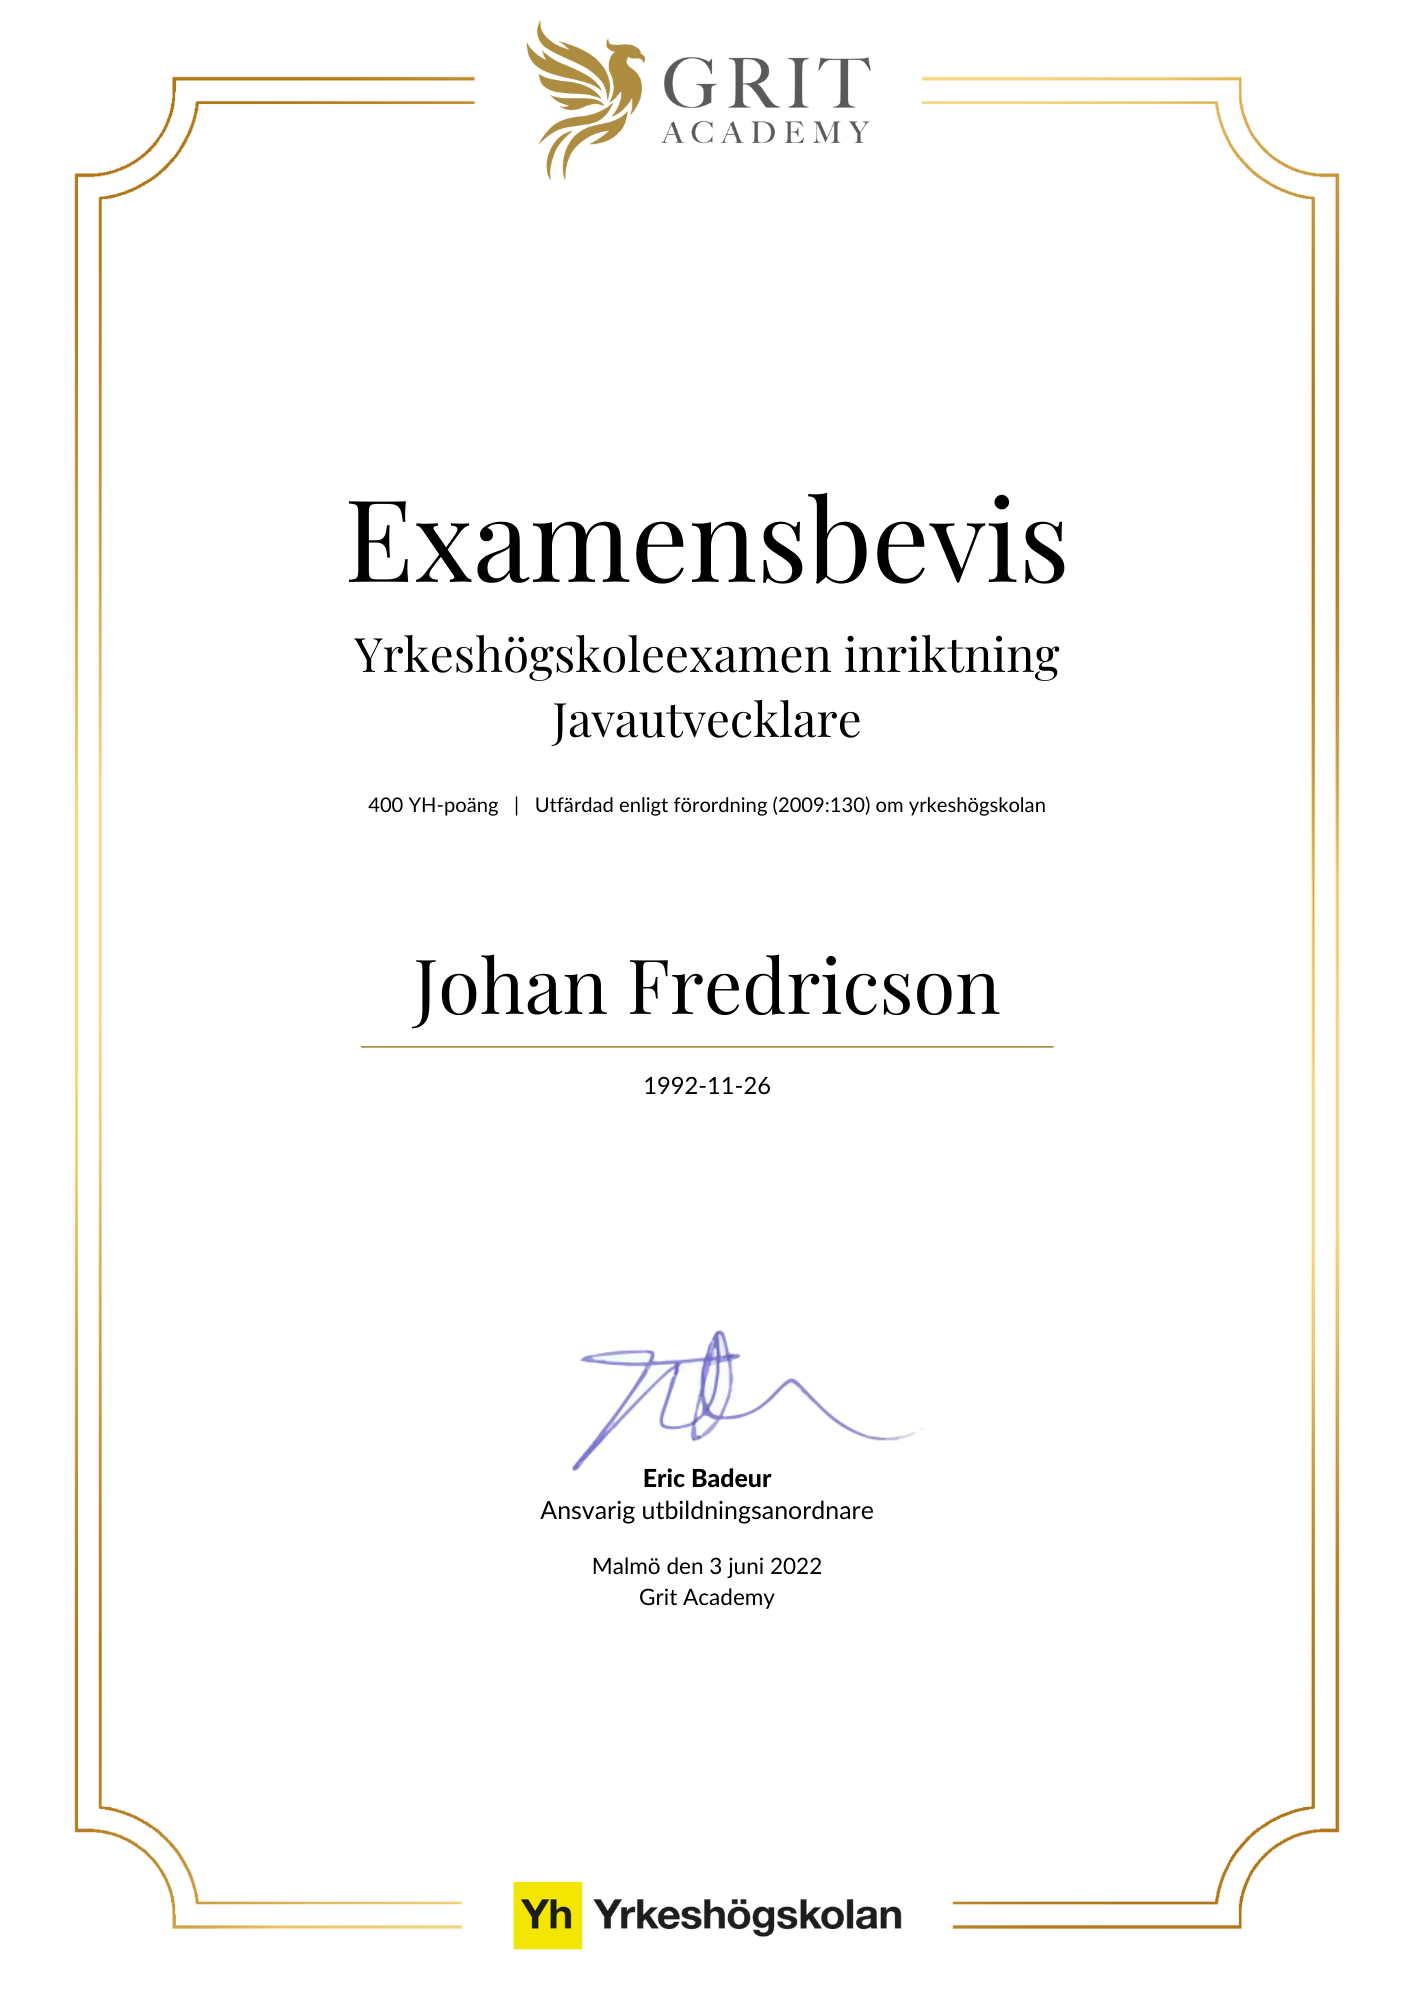 Examensbevis Johan Fredricson - 1